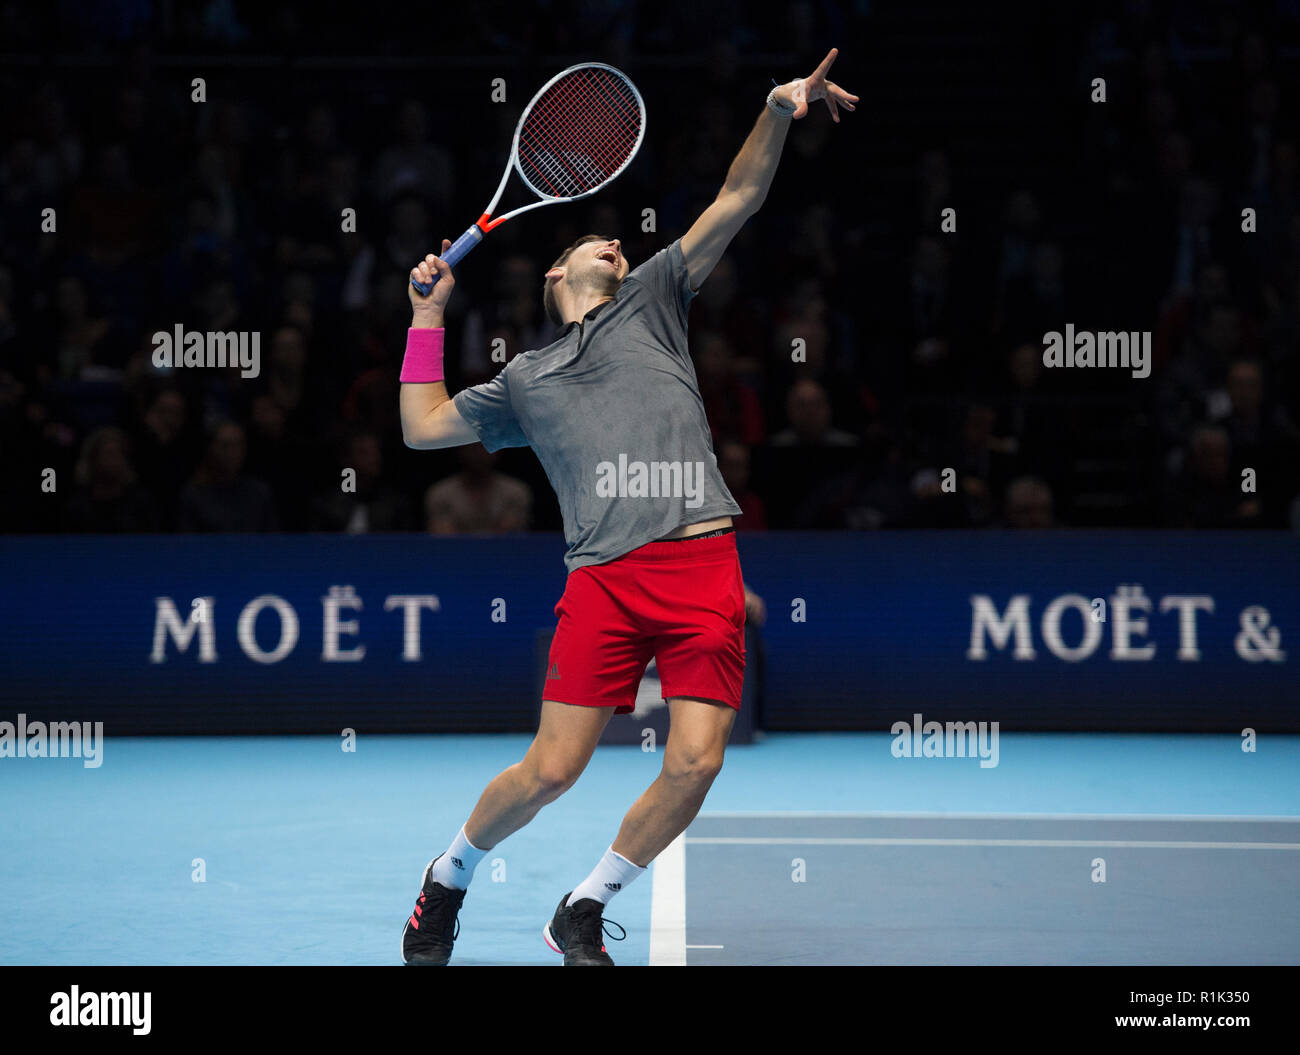 Dominic Thiem #98 Ranked ATP Tennis Player - Videos, Bio